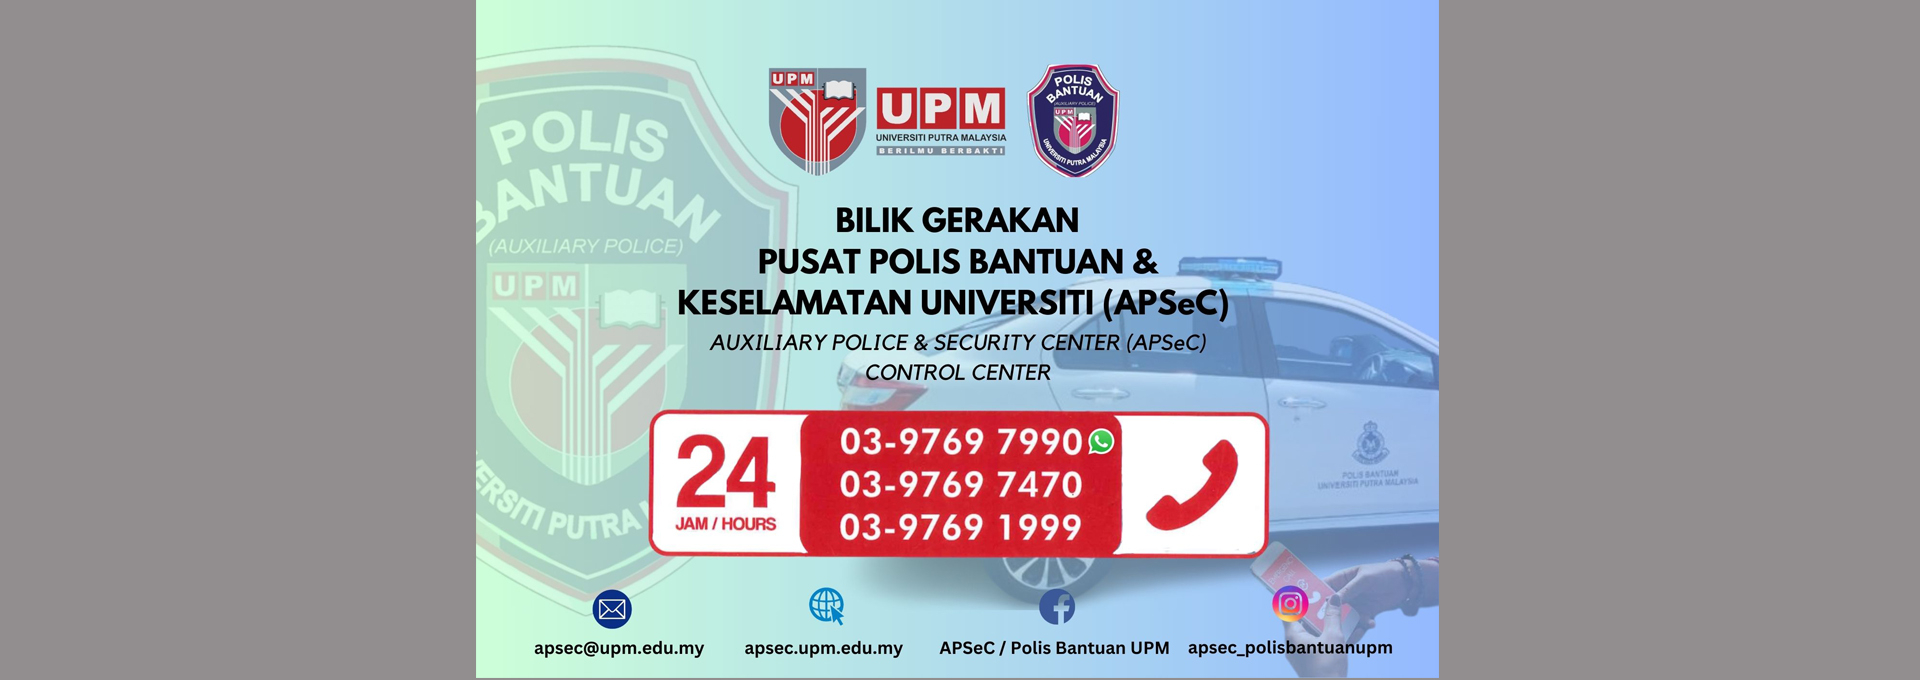 UPM Emergency Hotline (24 hours)